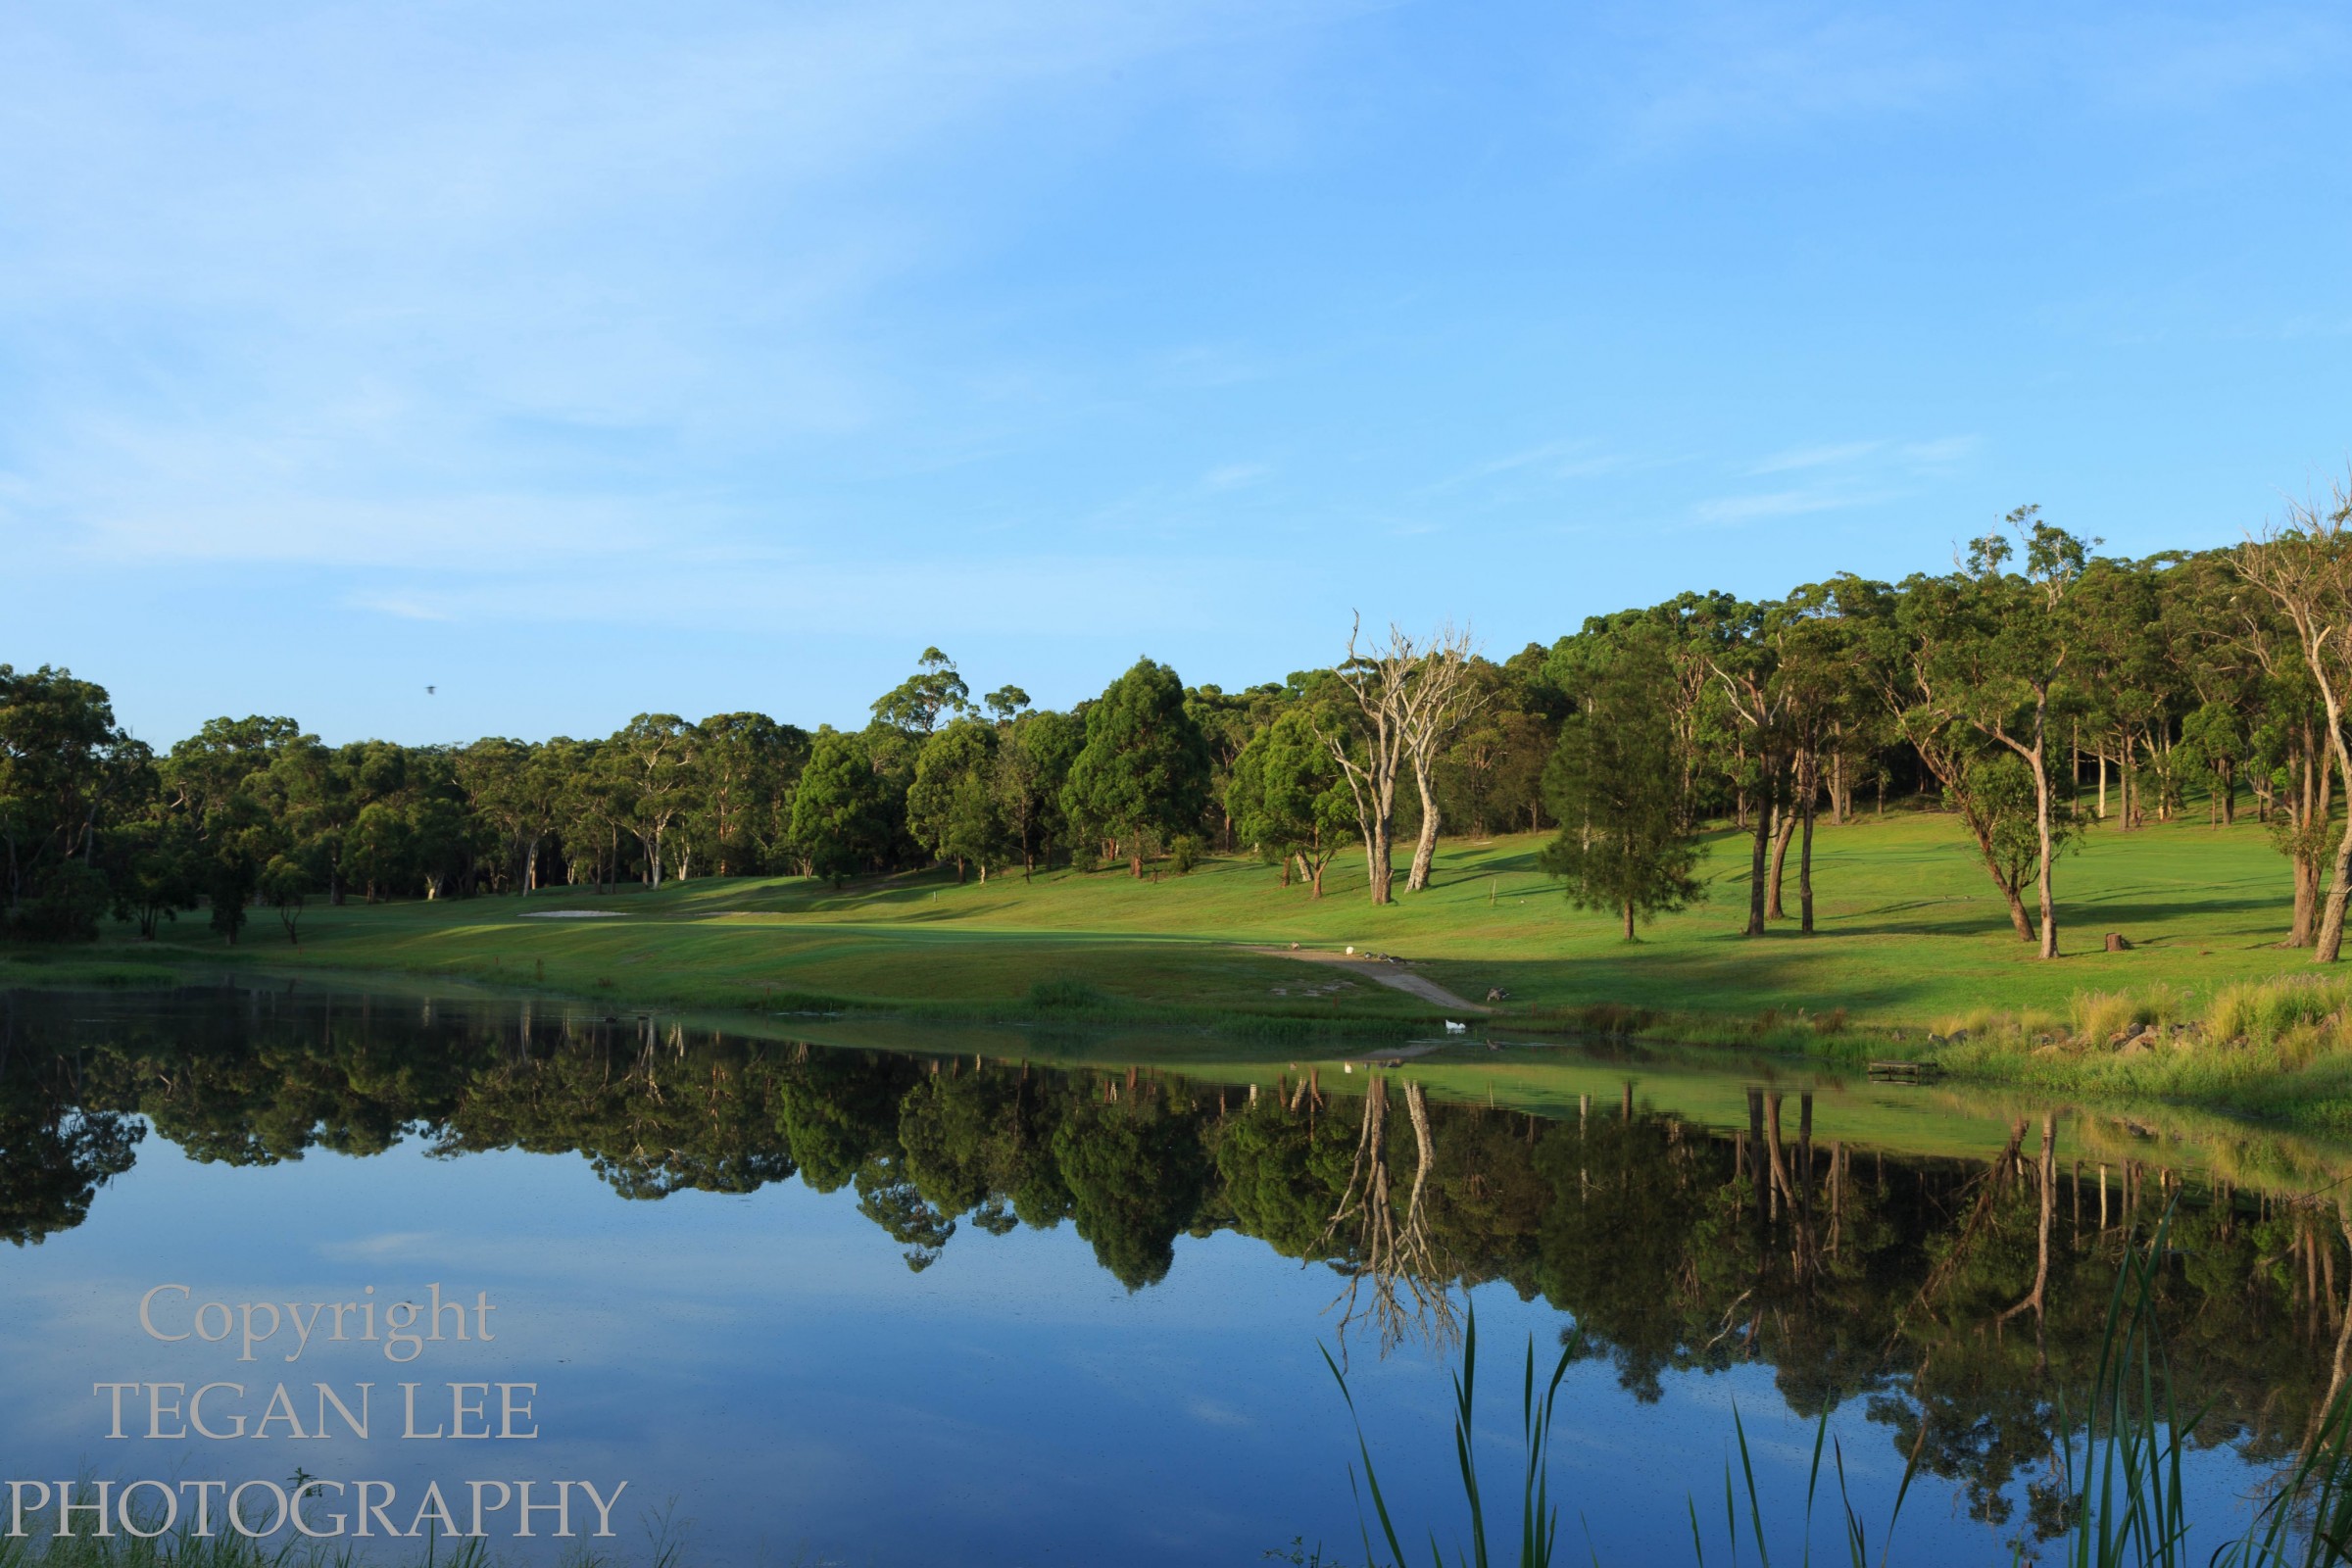 Tournament Golf is set to GO across NSW